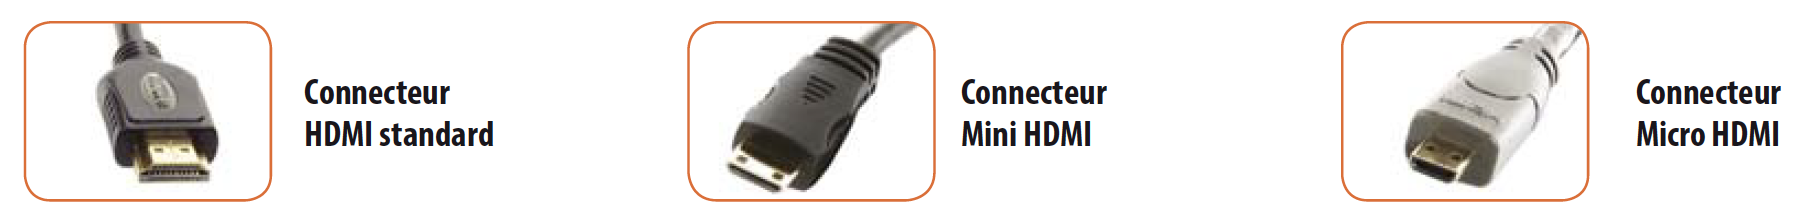 Connecteur mini micro HDMI et HDMI standard